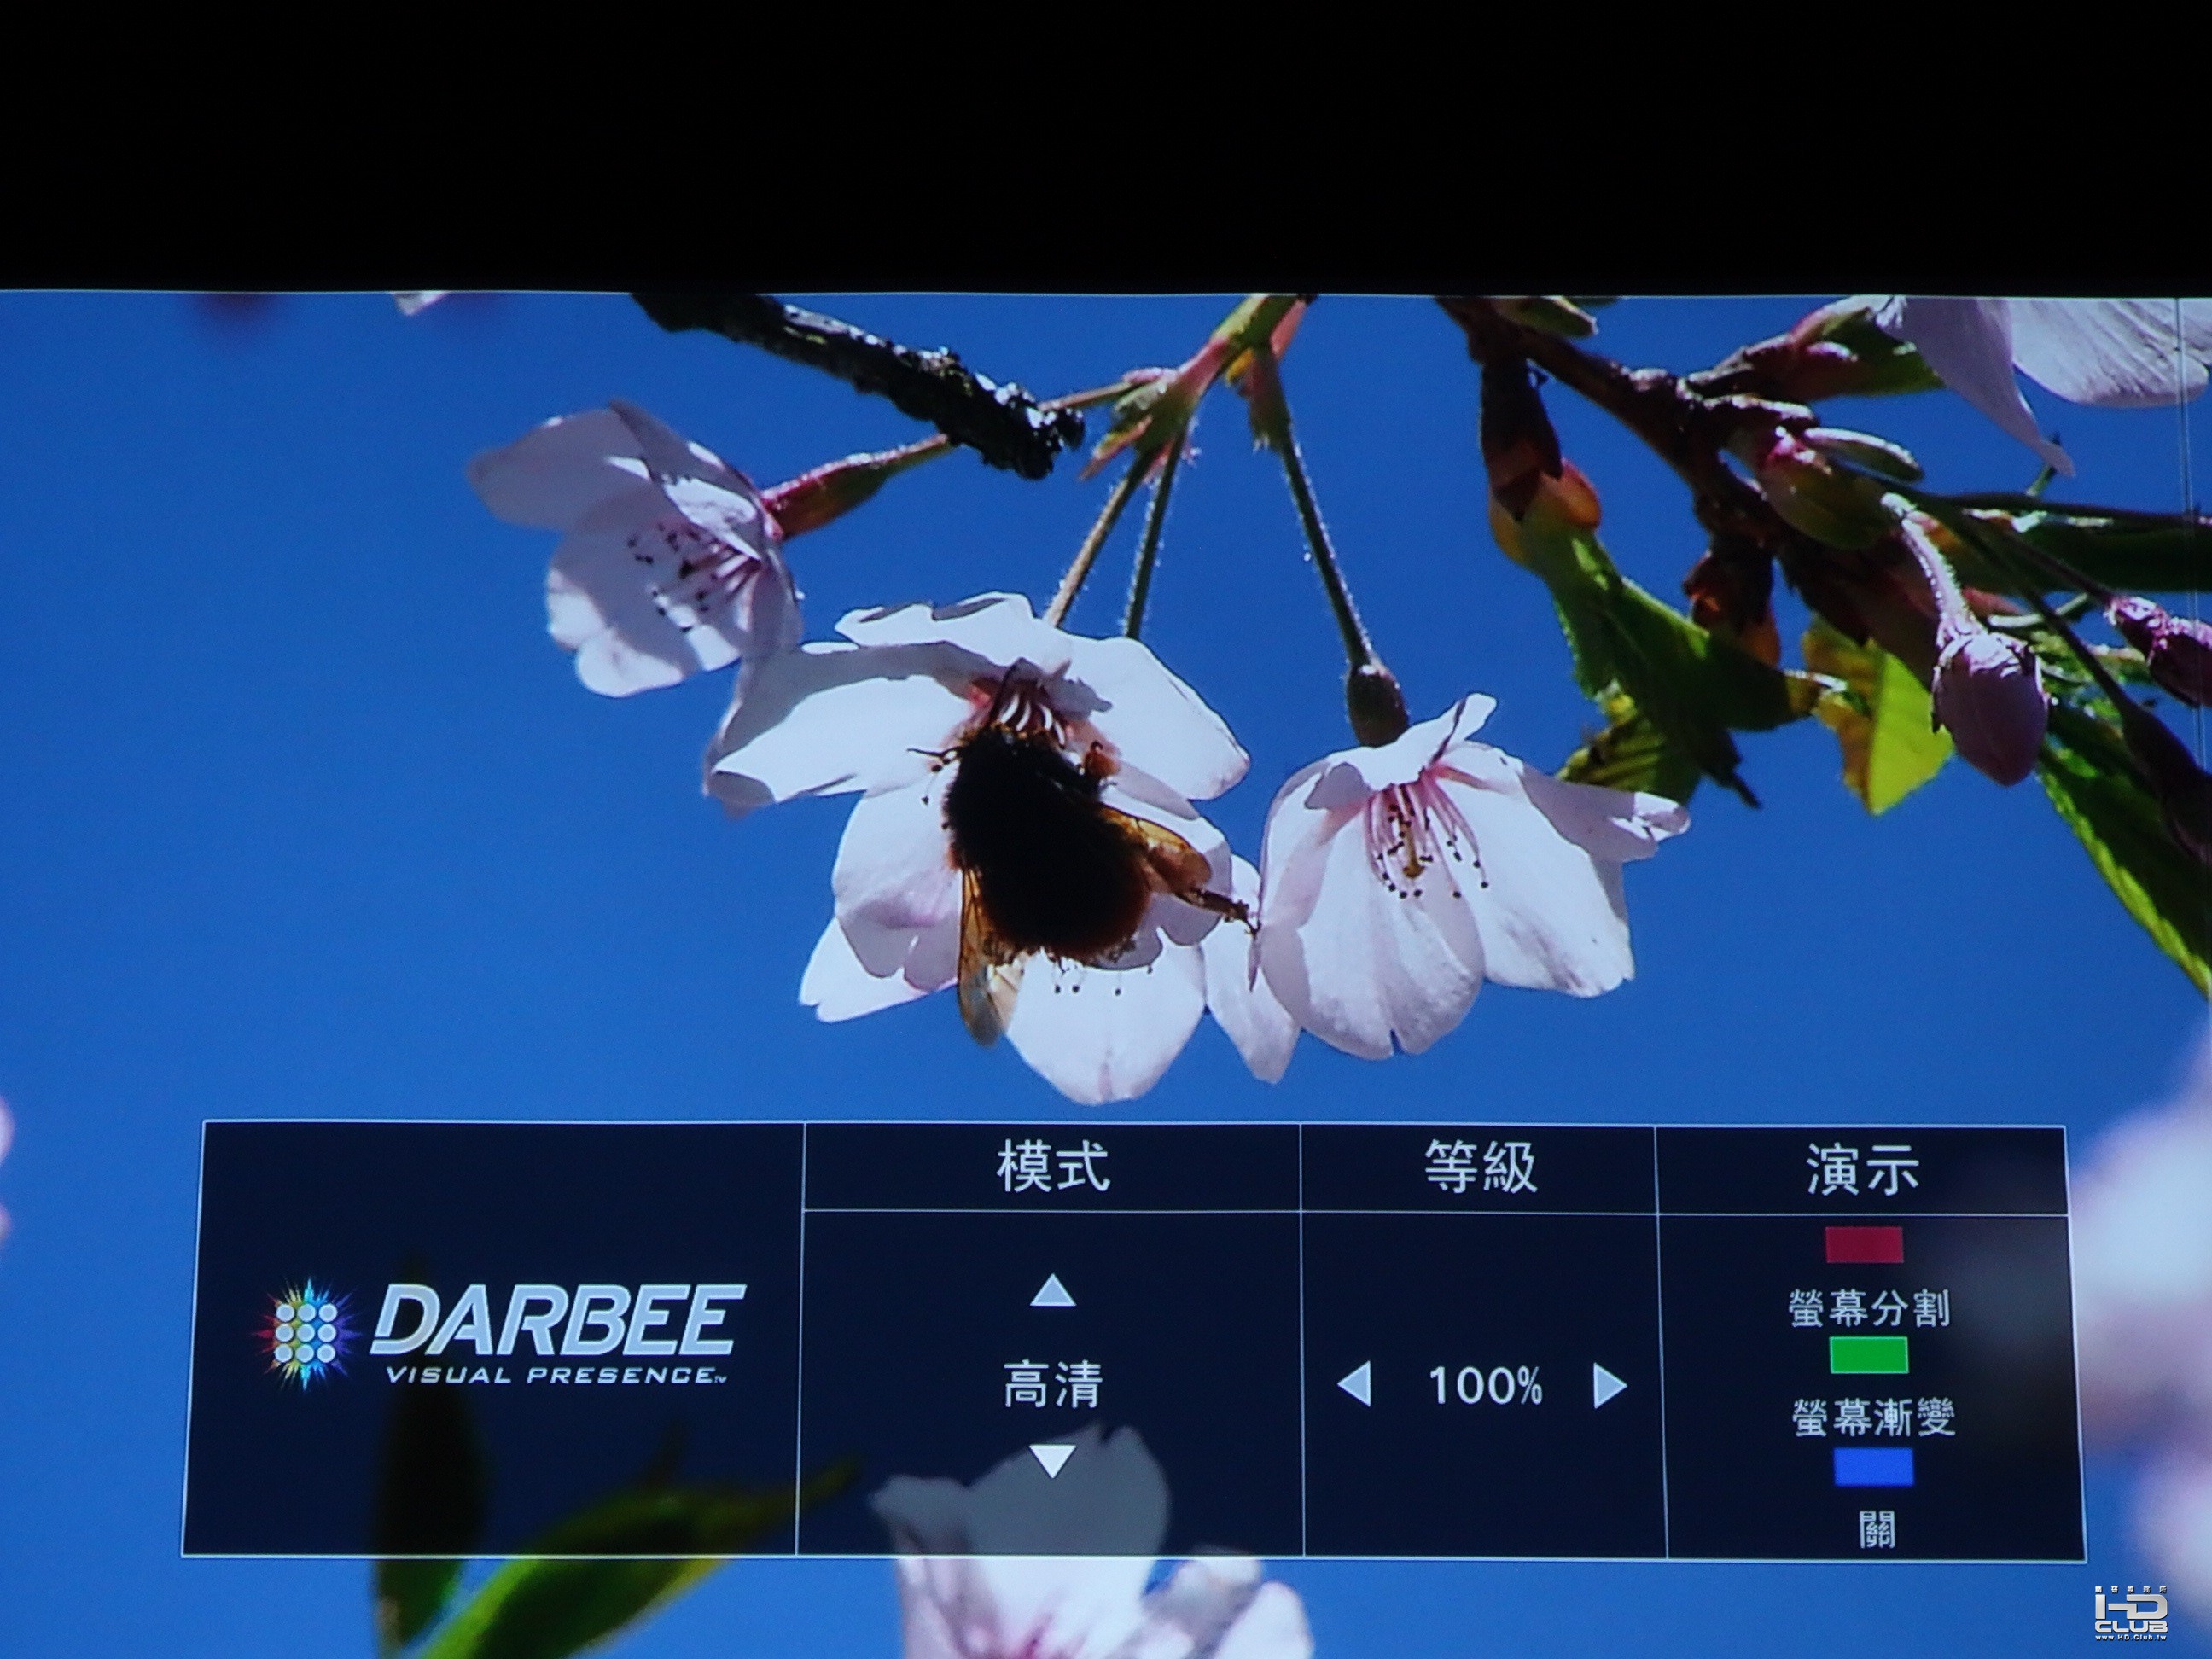 HD82開啟DARBEE